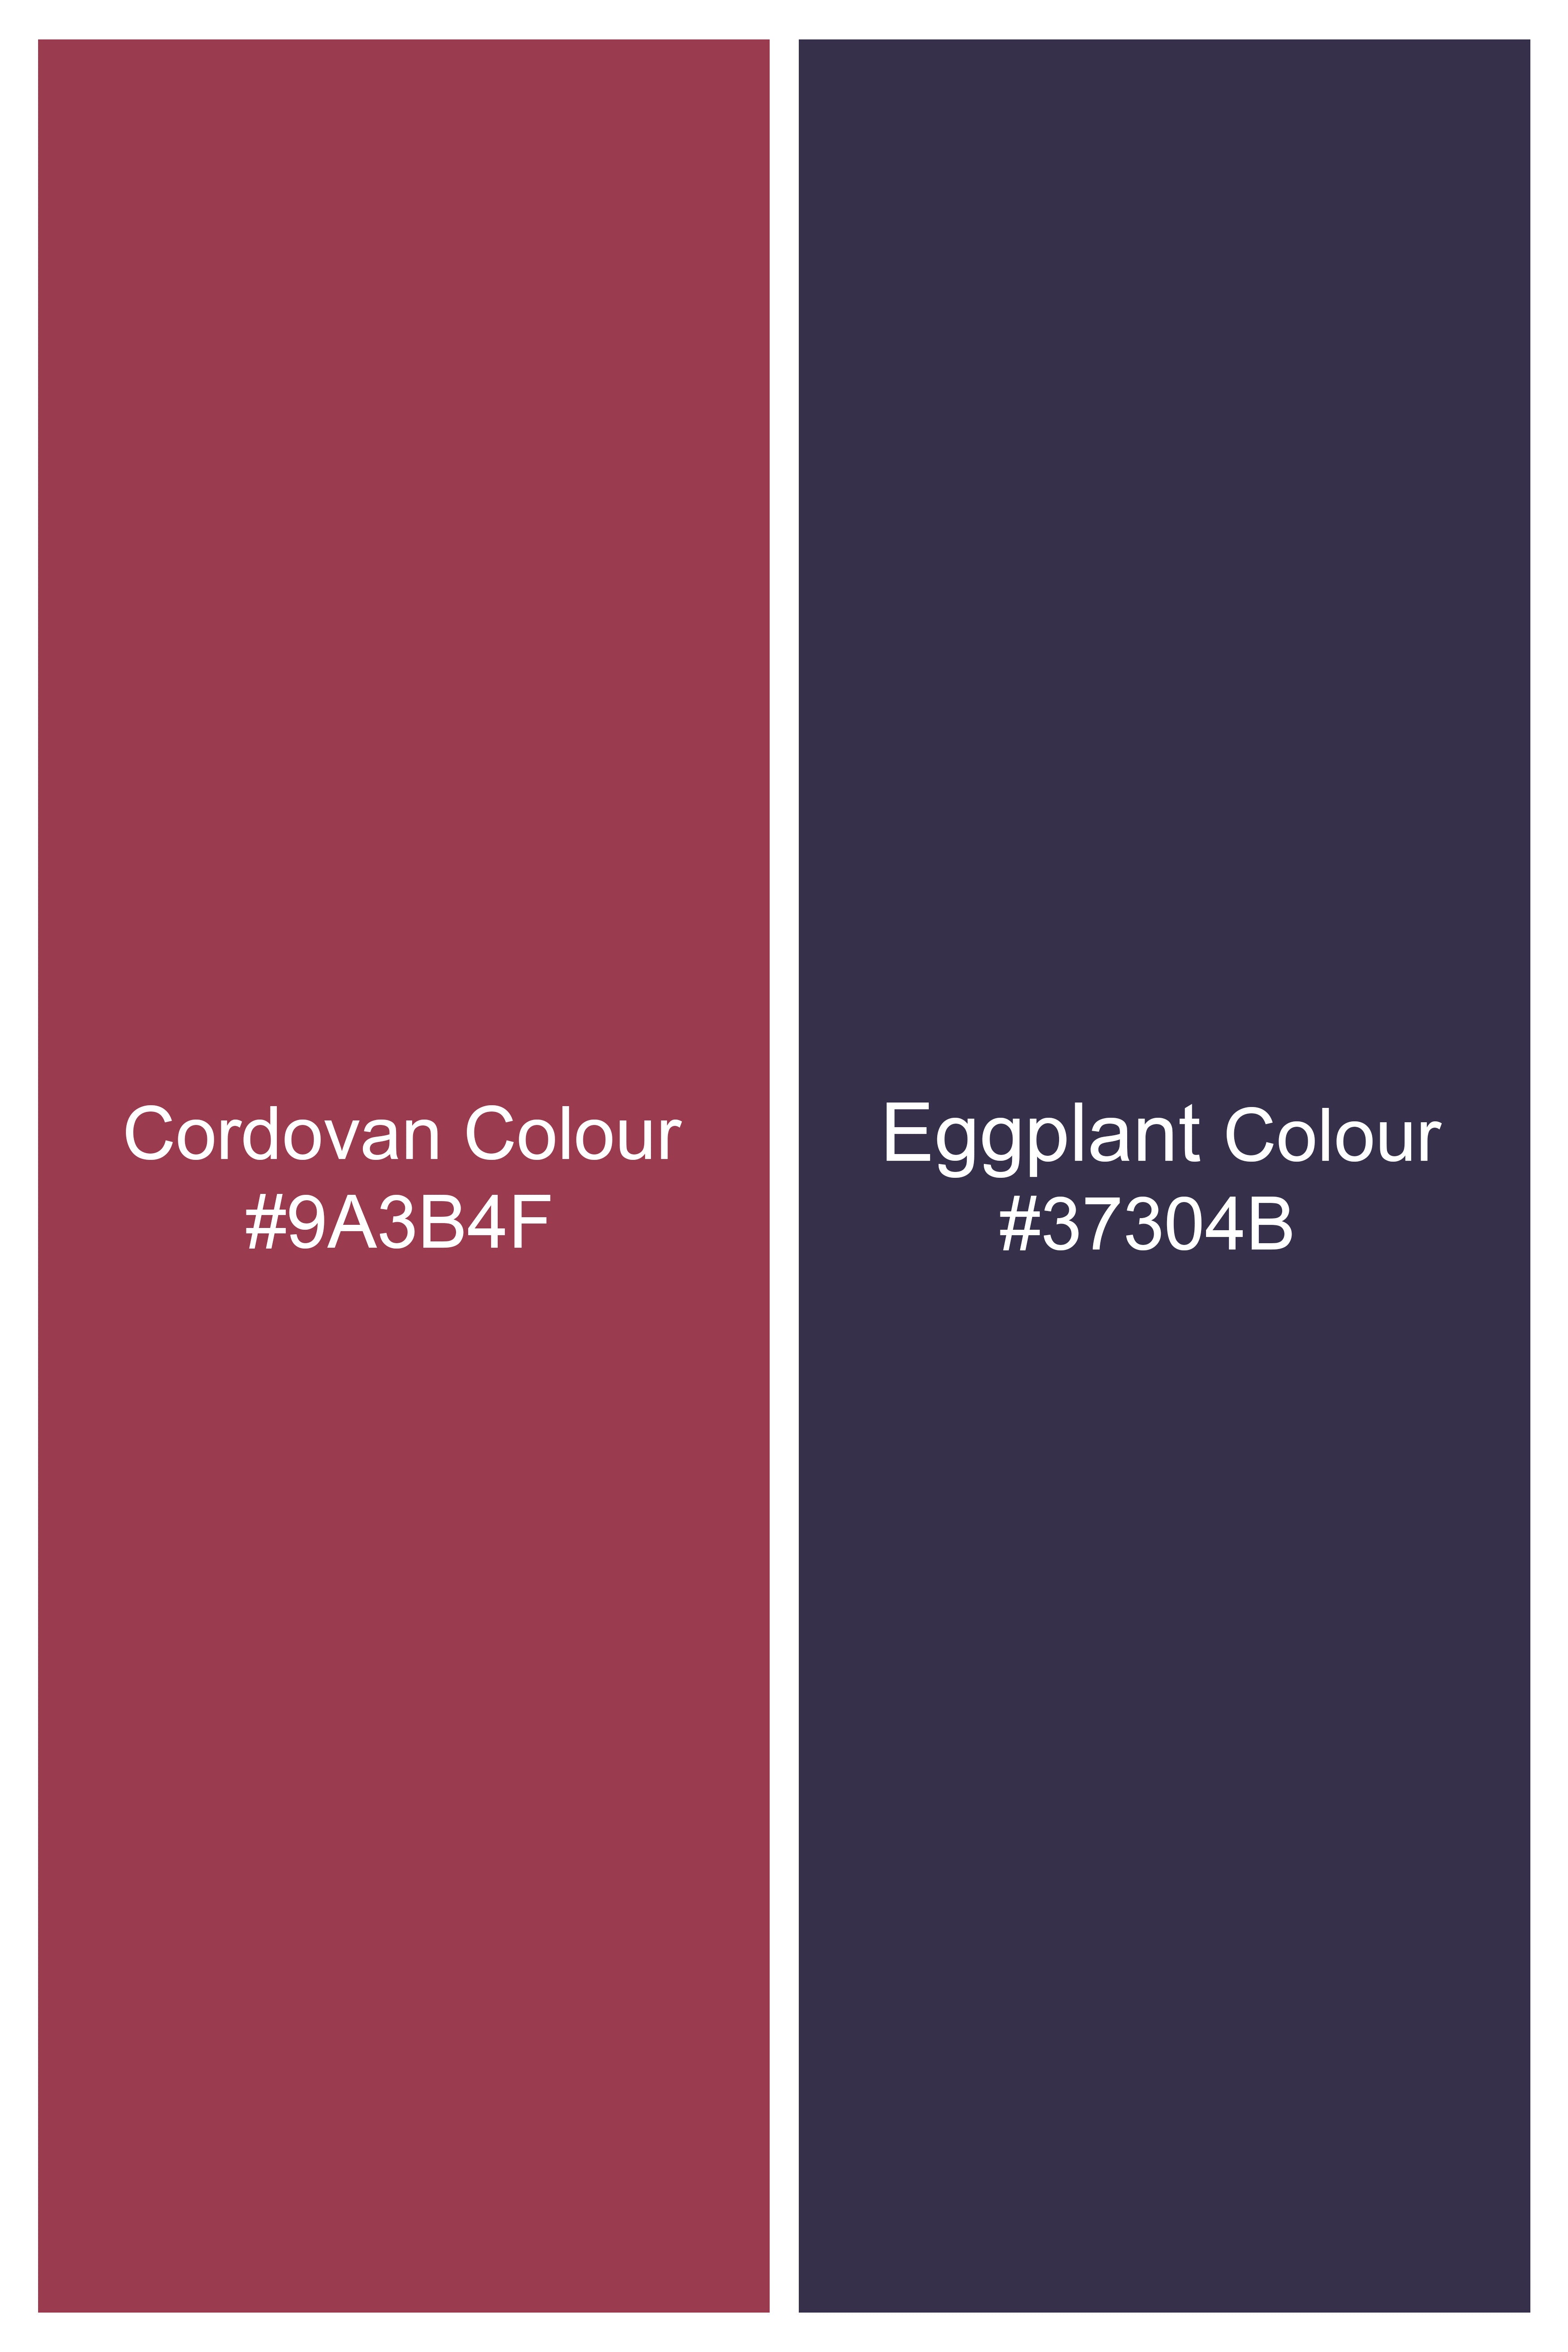 Cordovan Red and Eggplant Blue Jacquard Textured Premium Giza Cotton Shirt